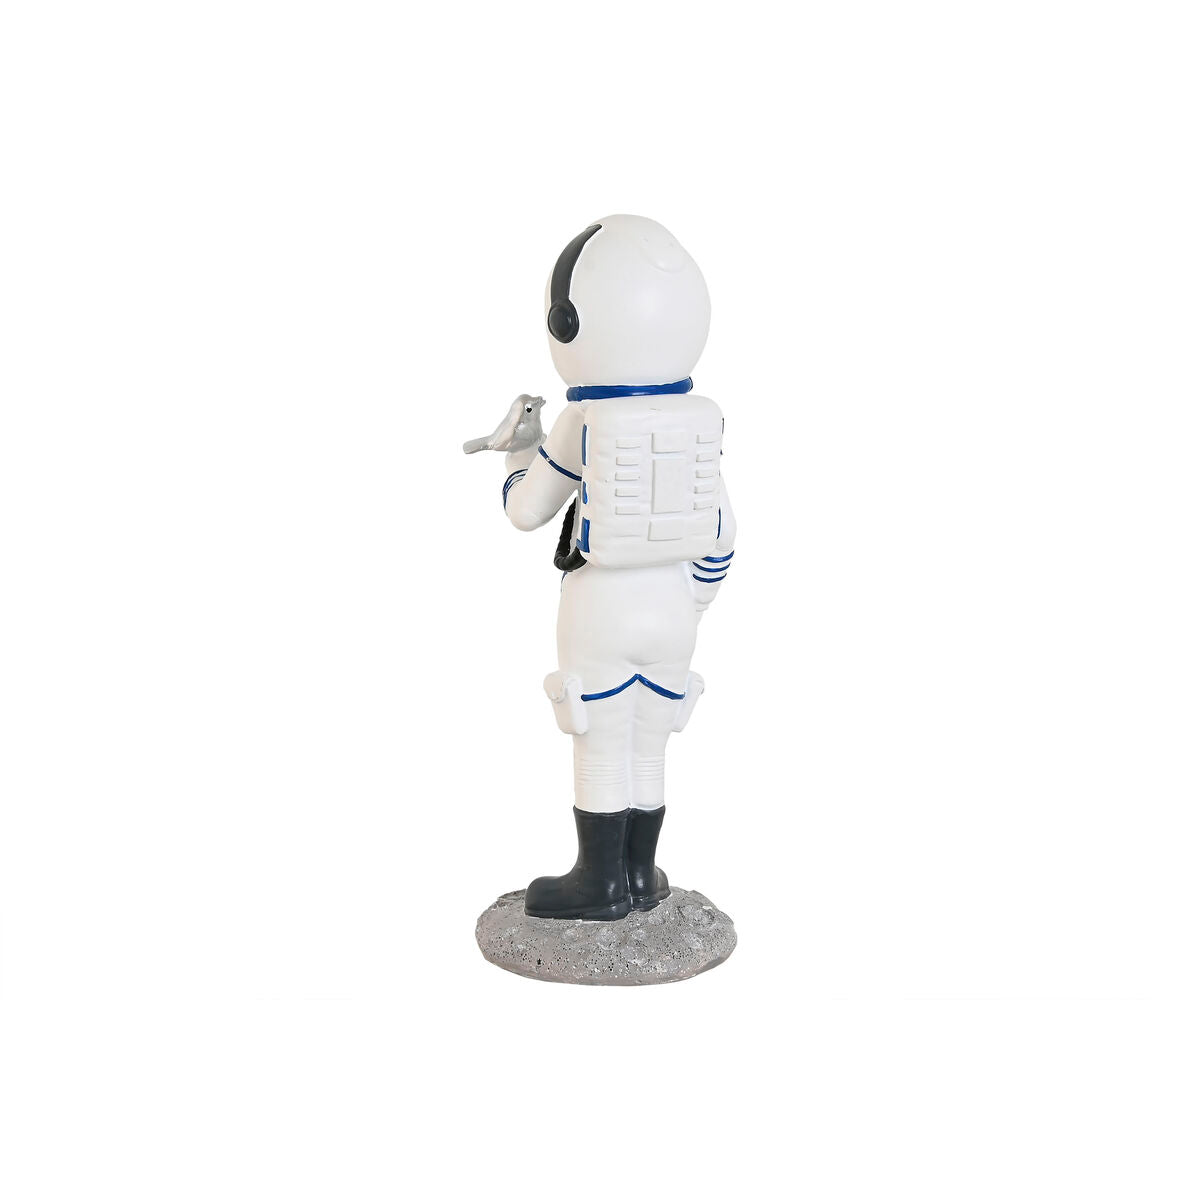 Figura Decorativa Home ESPRIT Azul Blanco Rojo Plateado Mujer Astronauta 10 x 11 x 29 cm (2 Unidades)